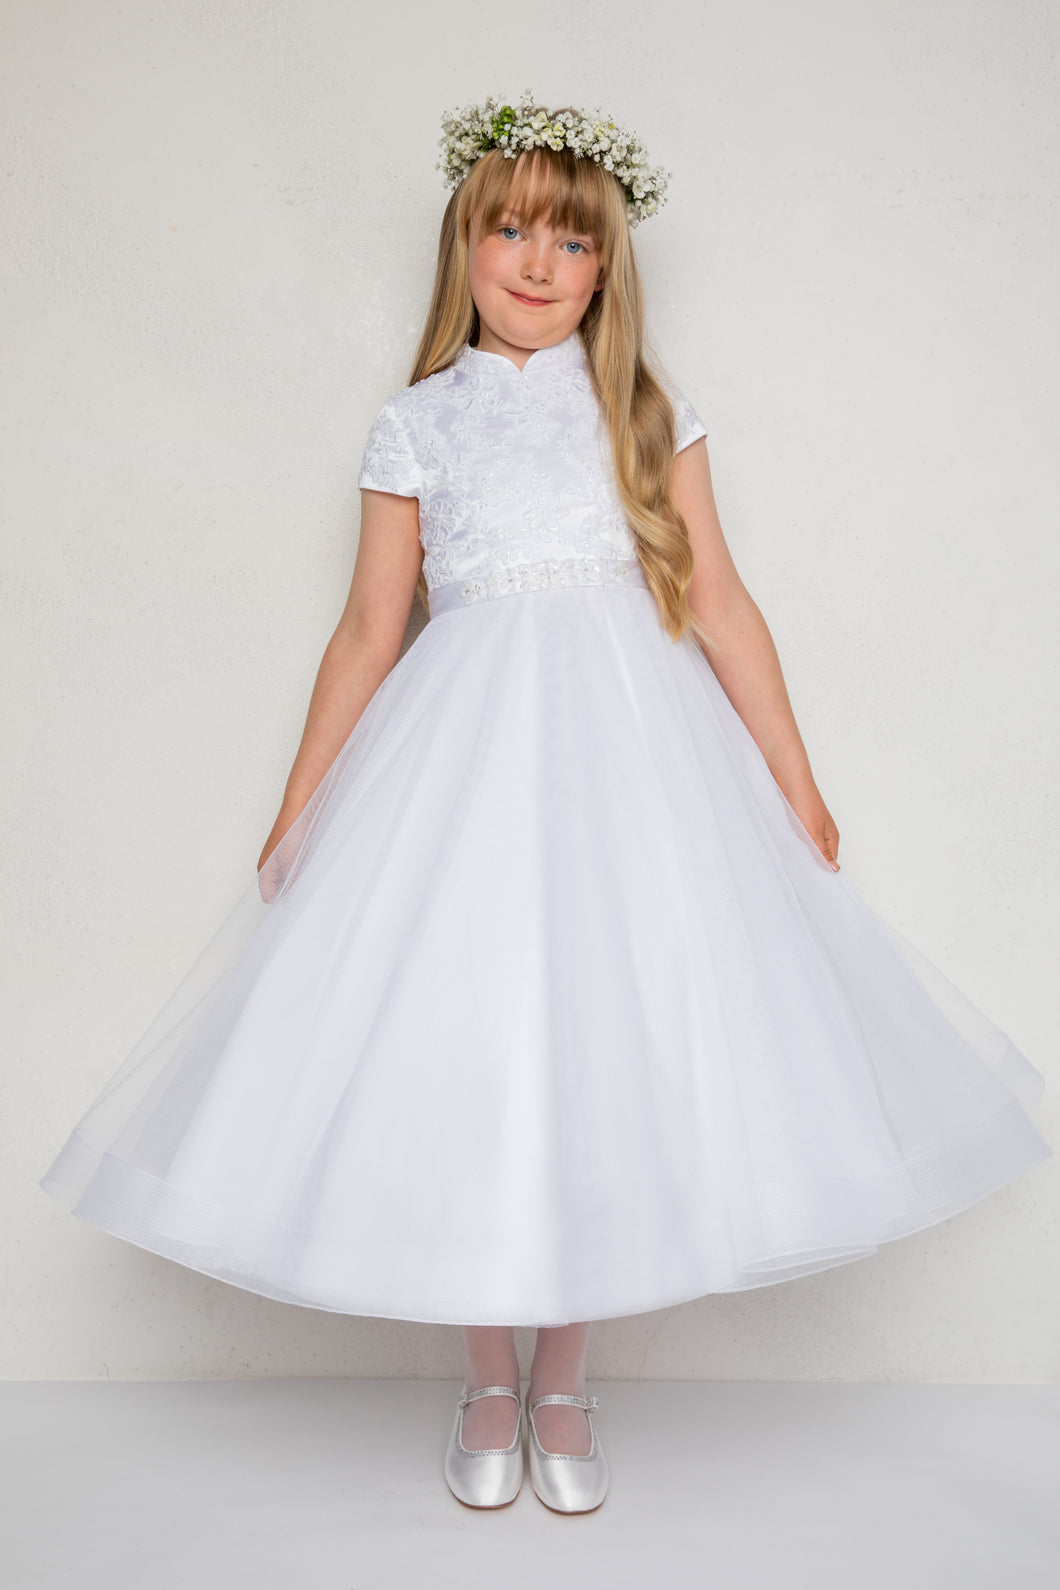 SALE COMMUNION DRESS Koko Girls White Communion Dress:- KO22365 Age 8 & 9